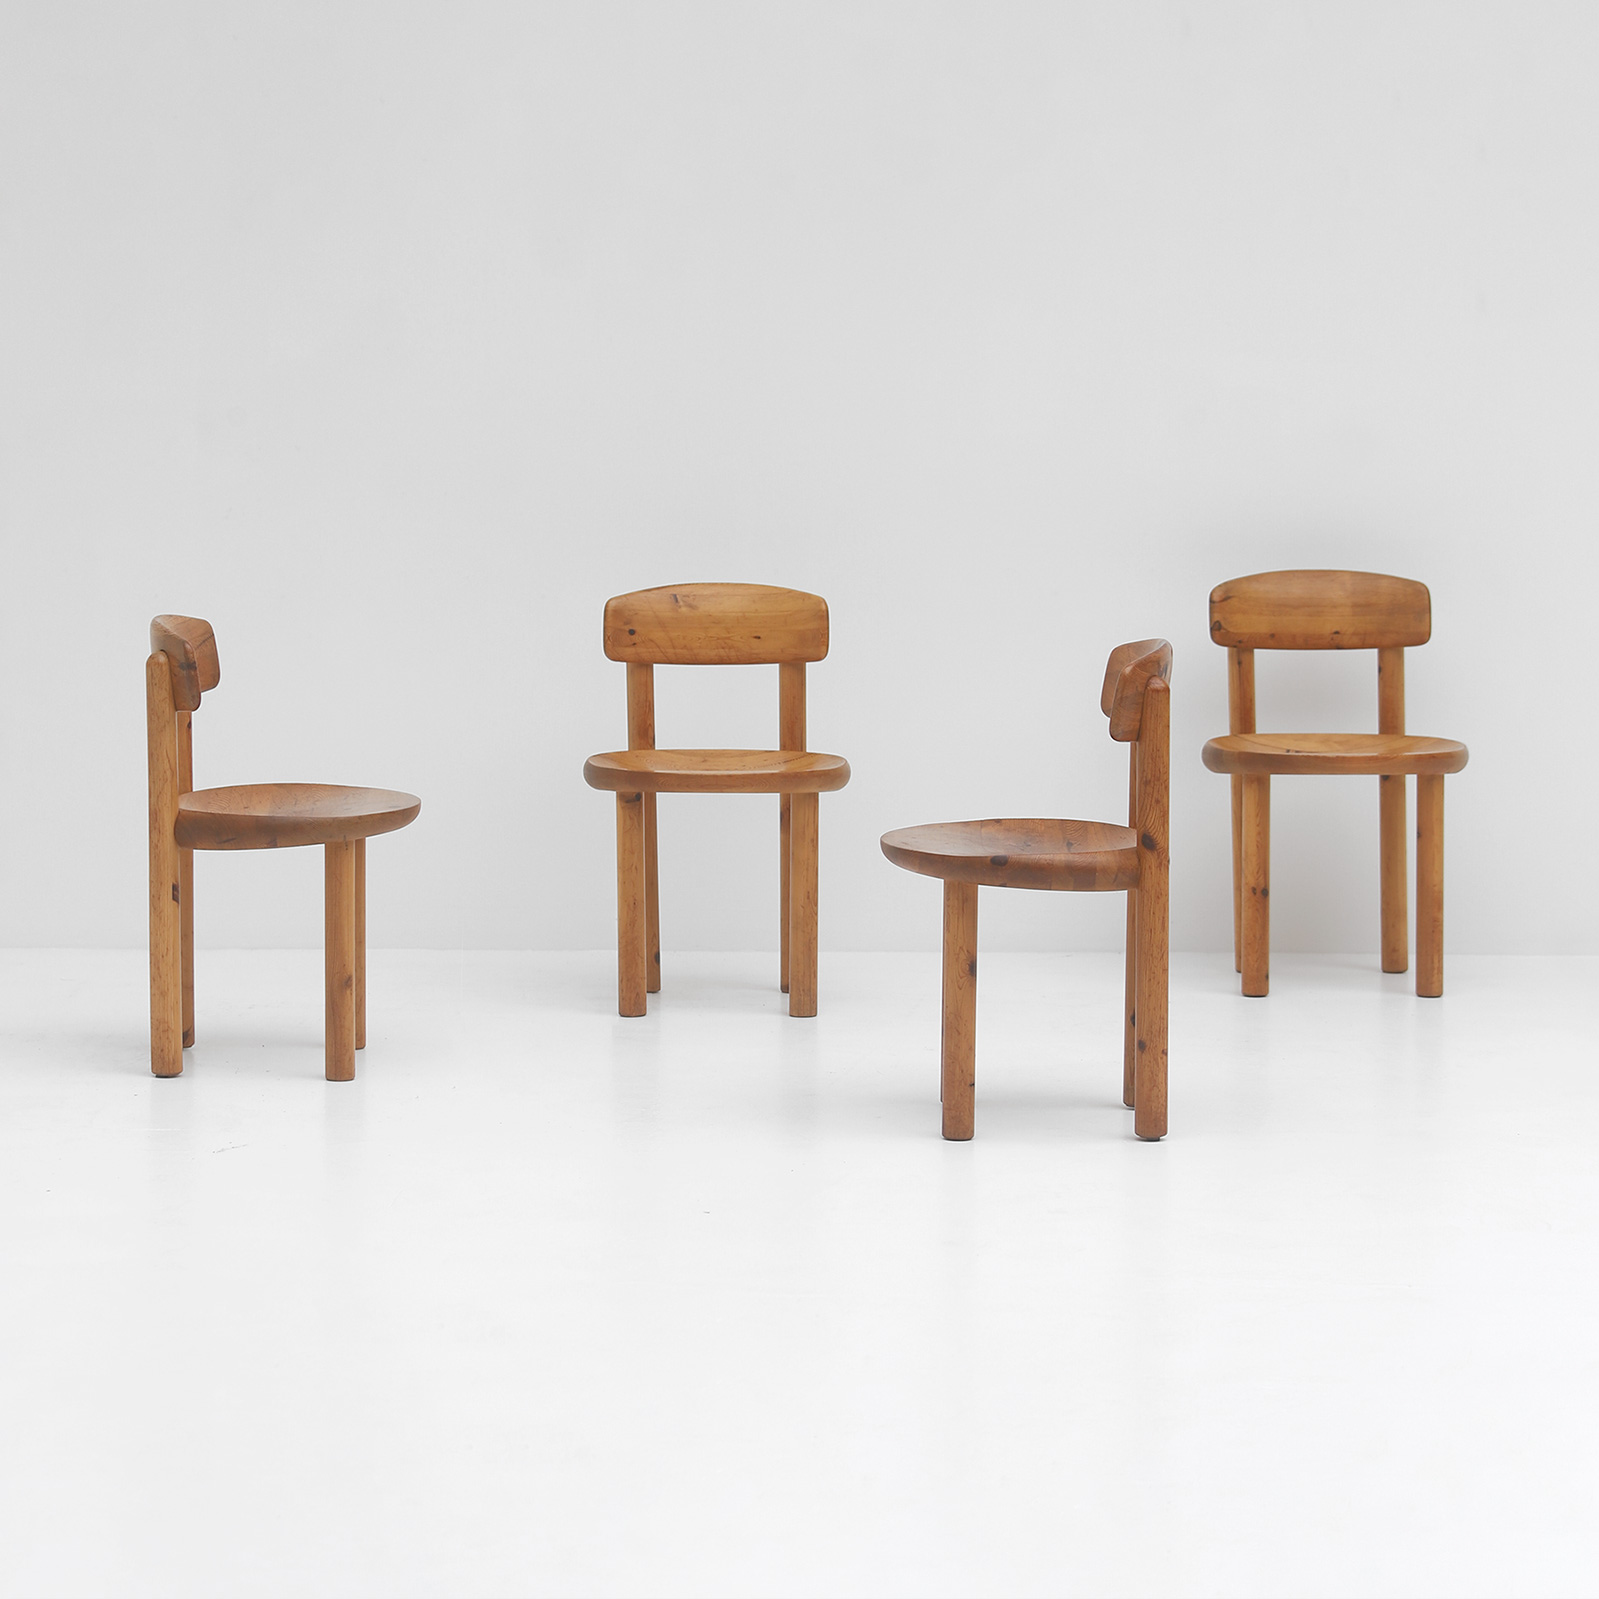 5 Daumiller Pinewood Chairs